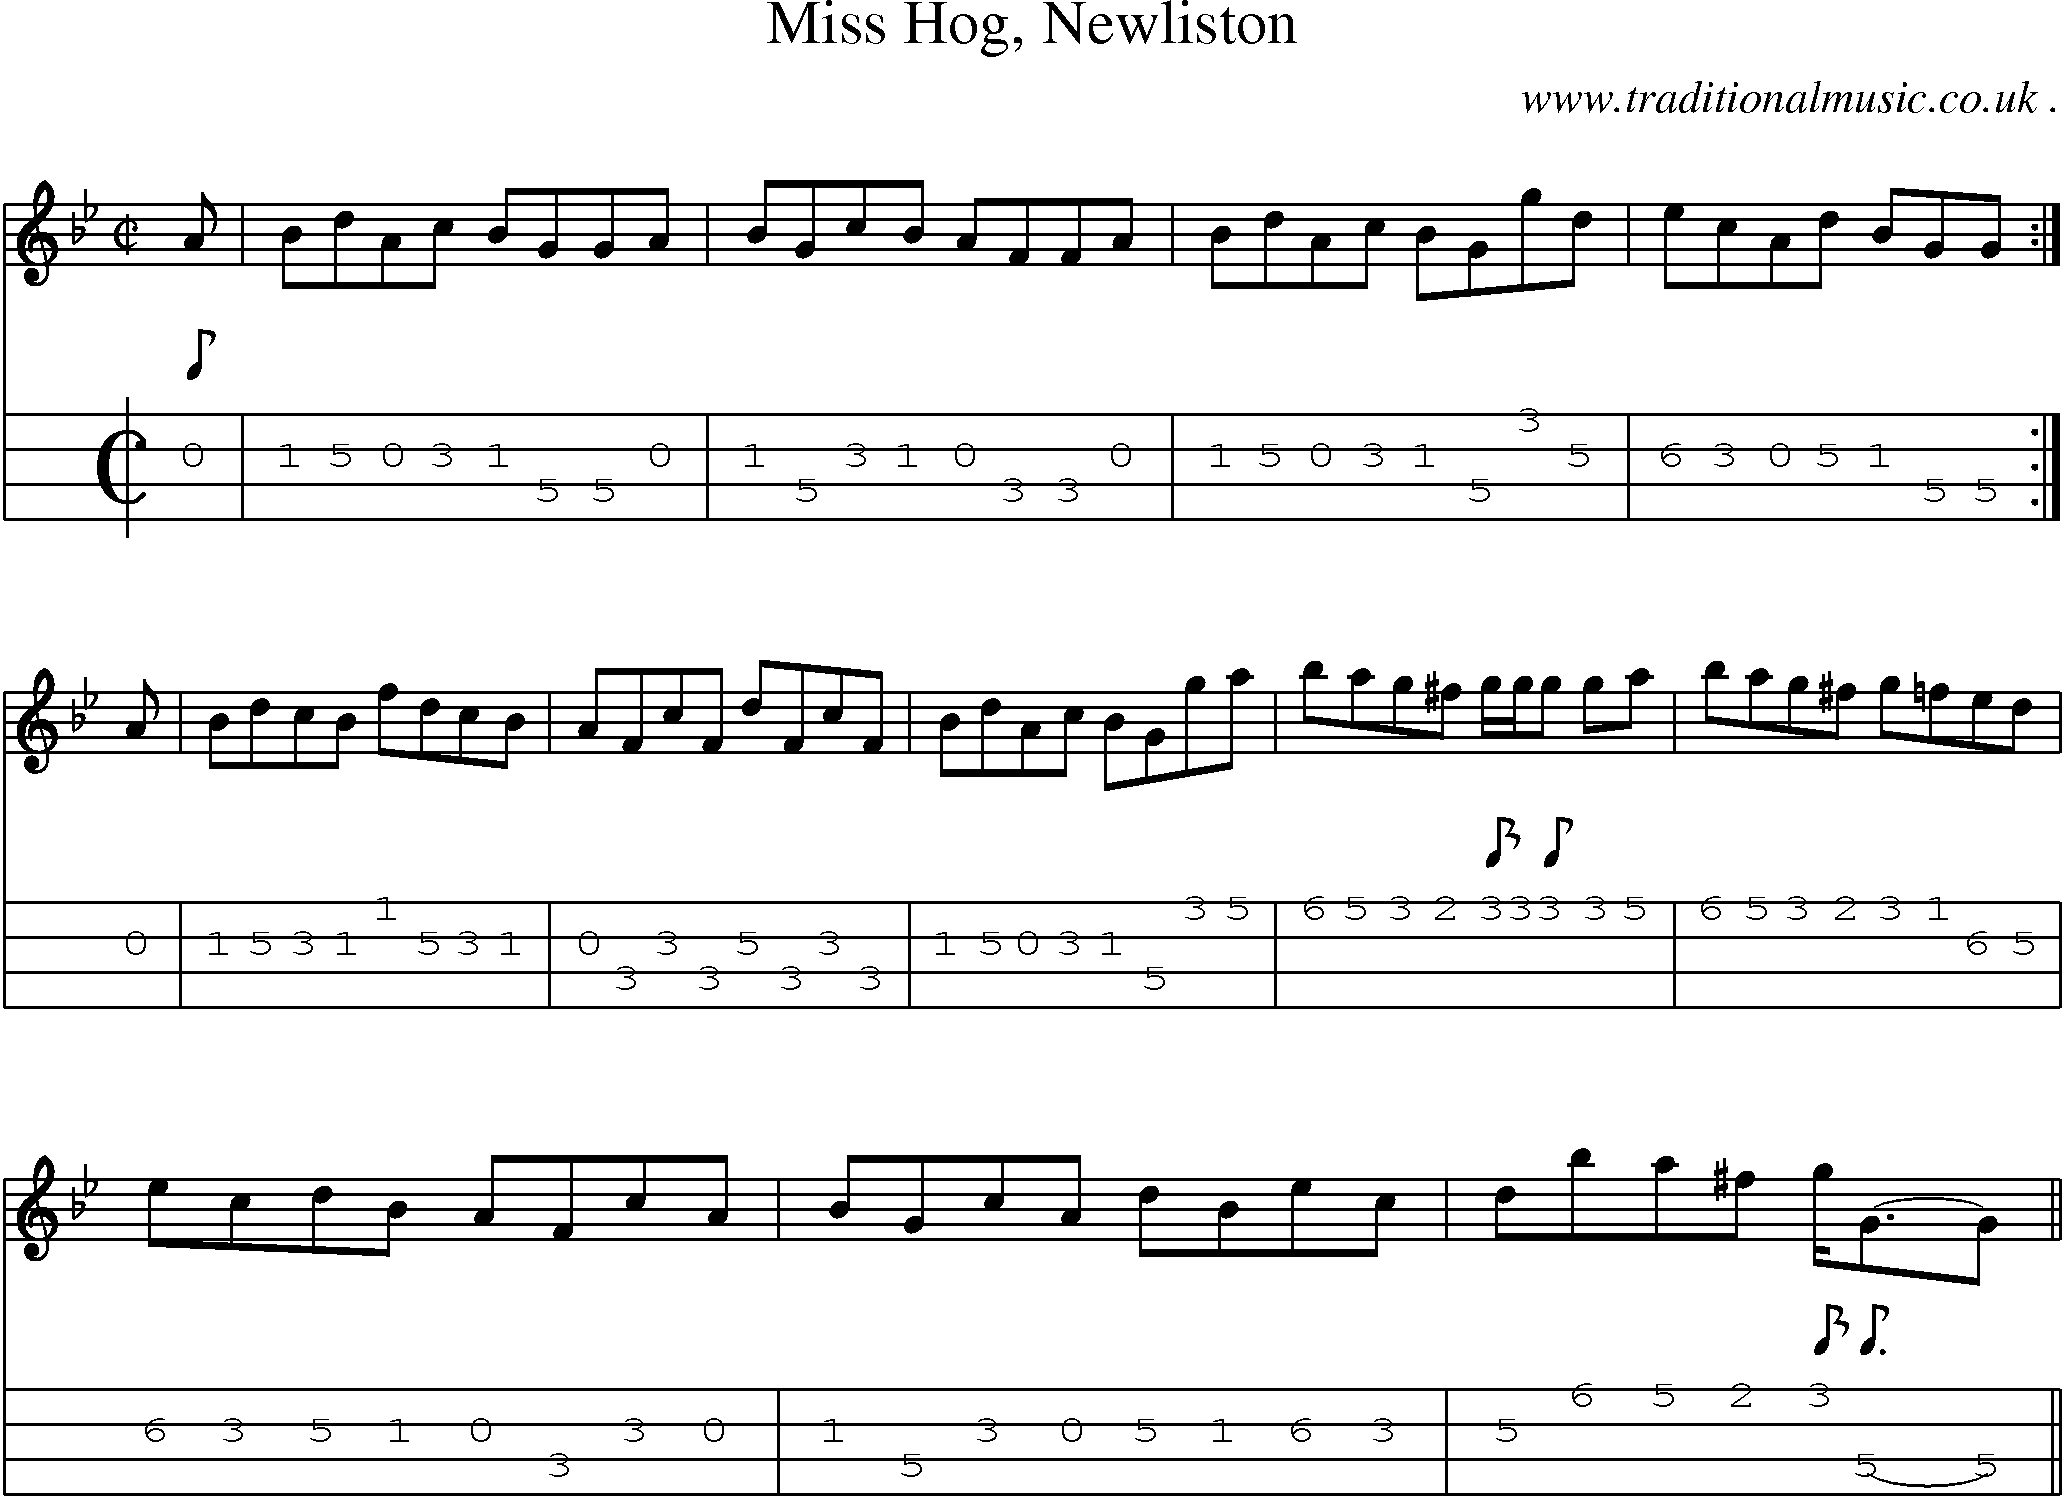 Sheet-music  score, Chords and Mandolin Tabs for Miss Hog Newliston